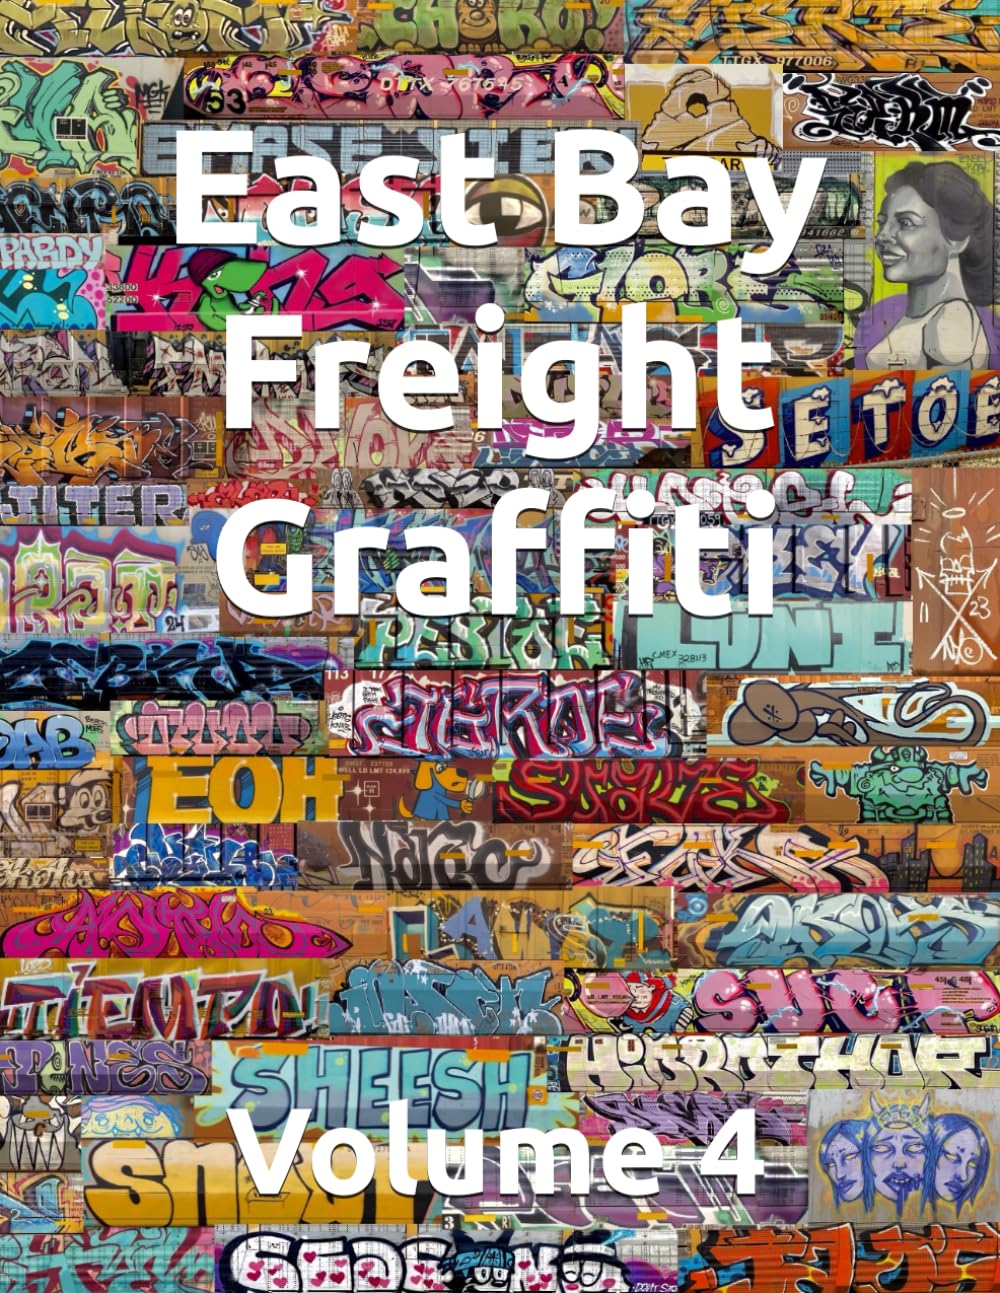 East Bay Freight Graffiti